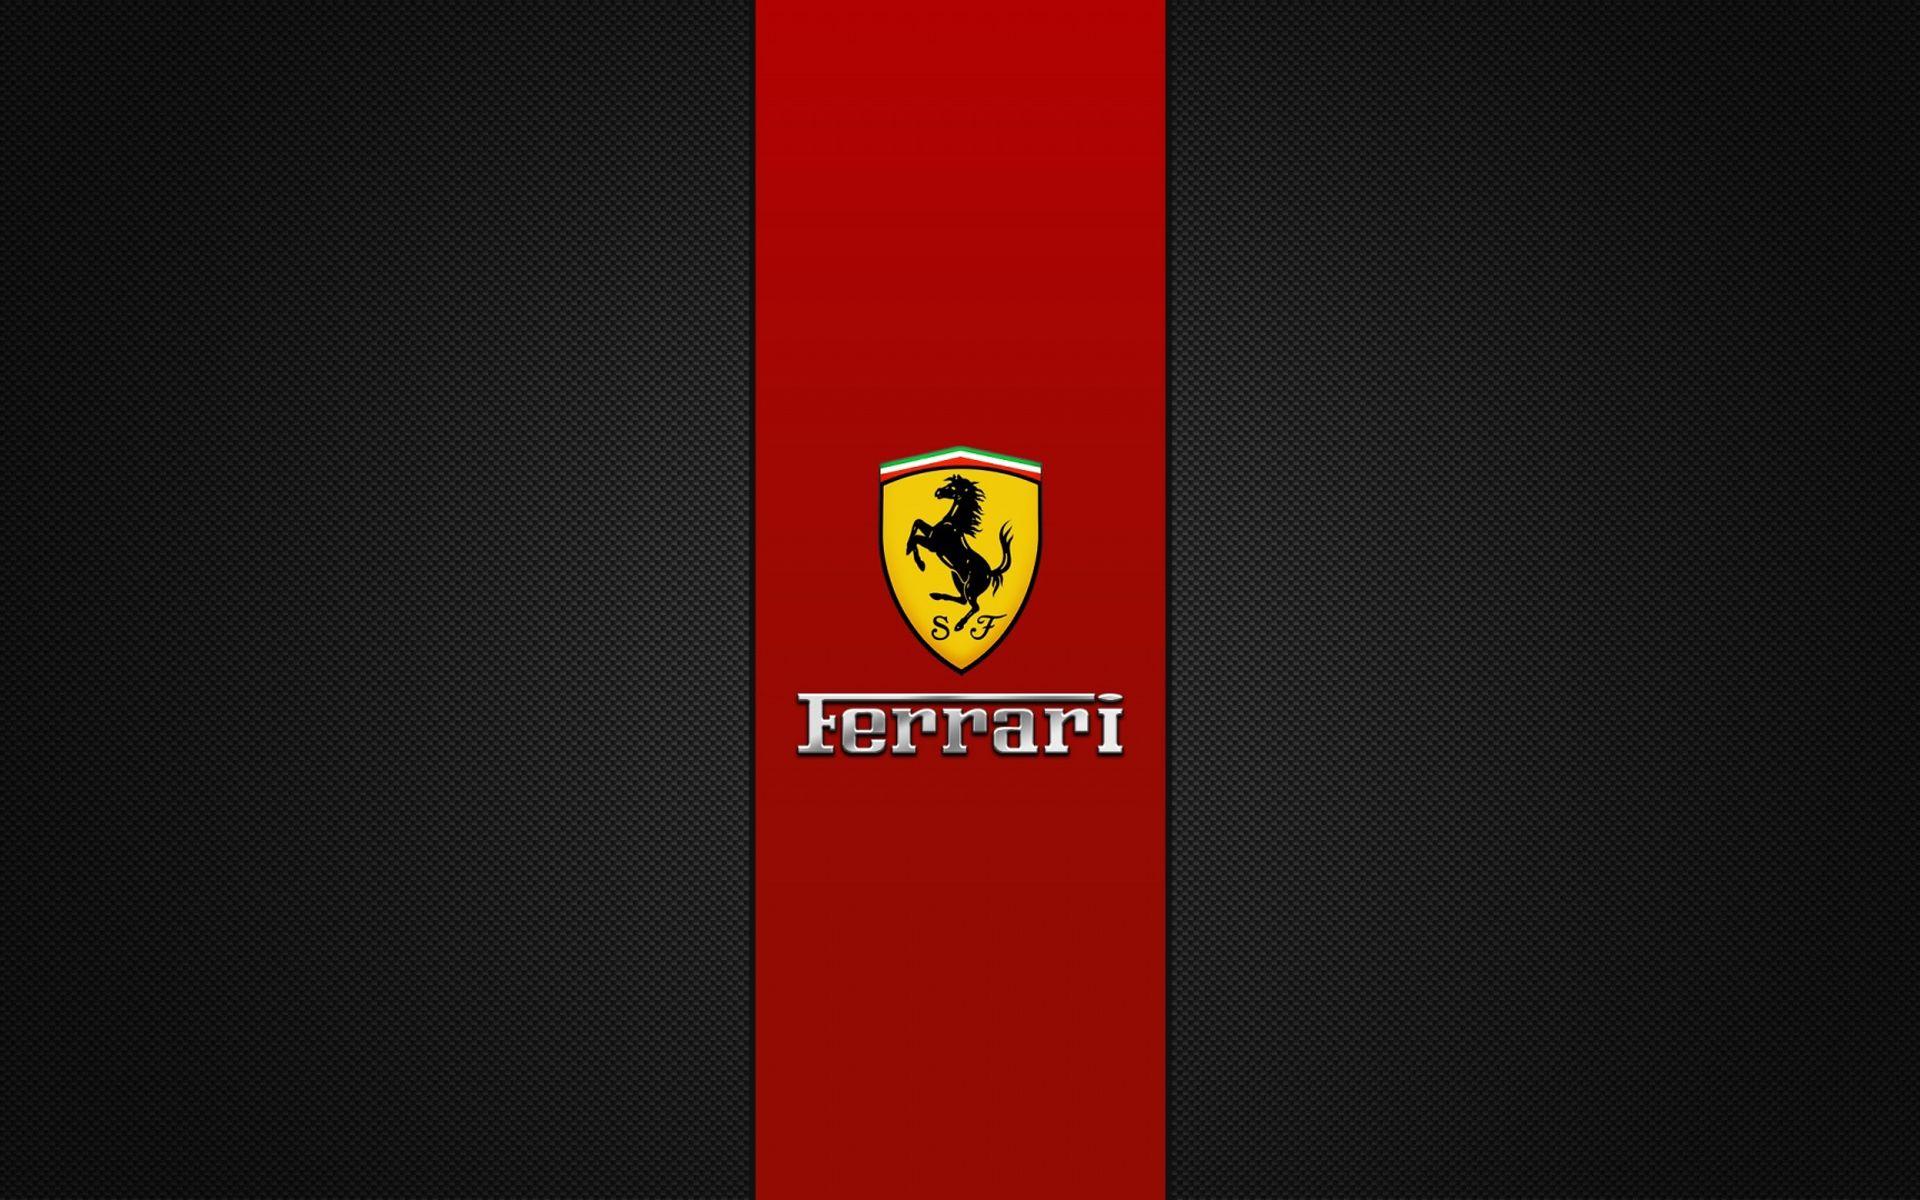 Ferrari Logo Wallpaper HD. Outfits I want to wear